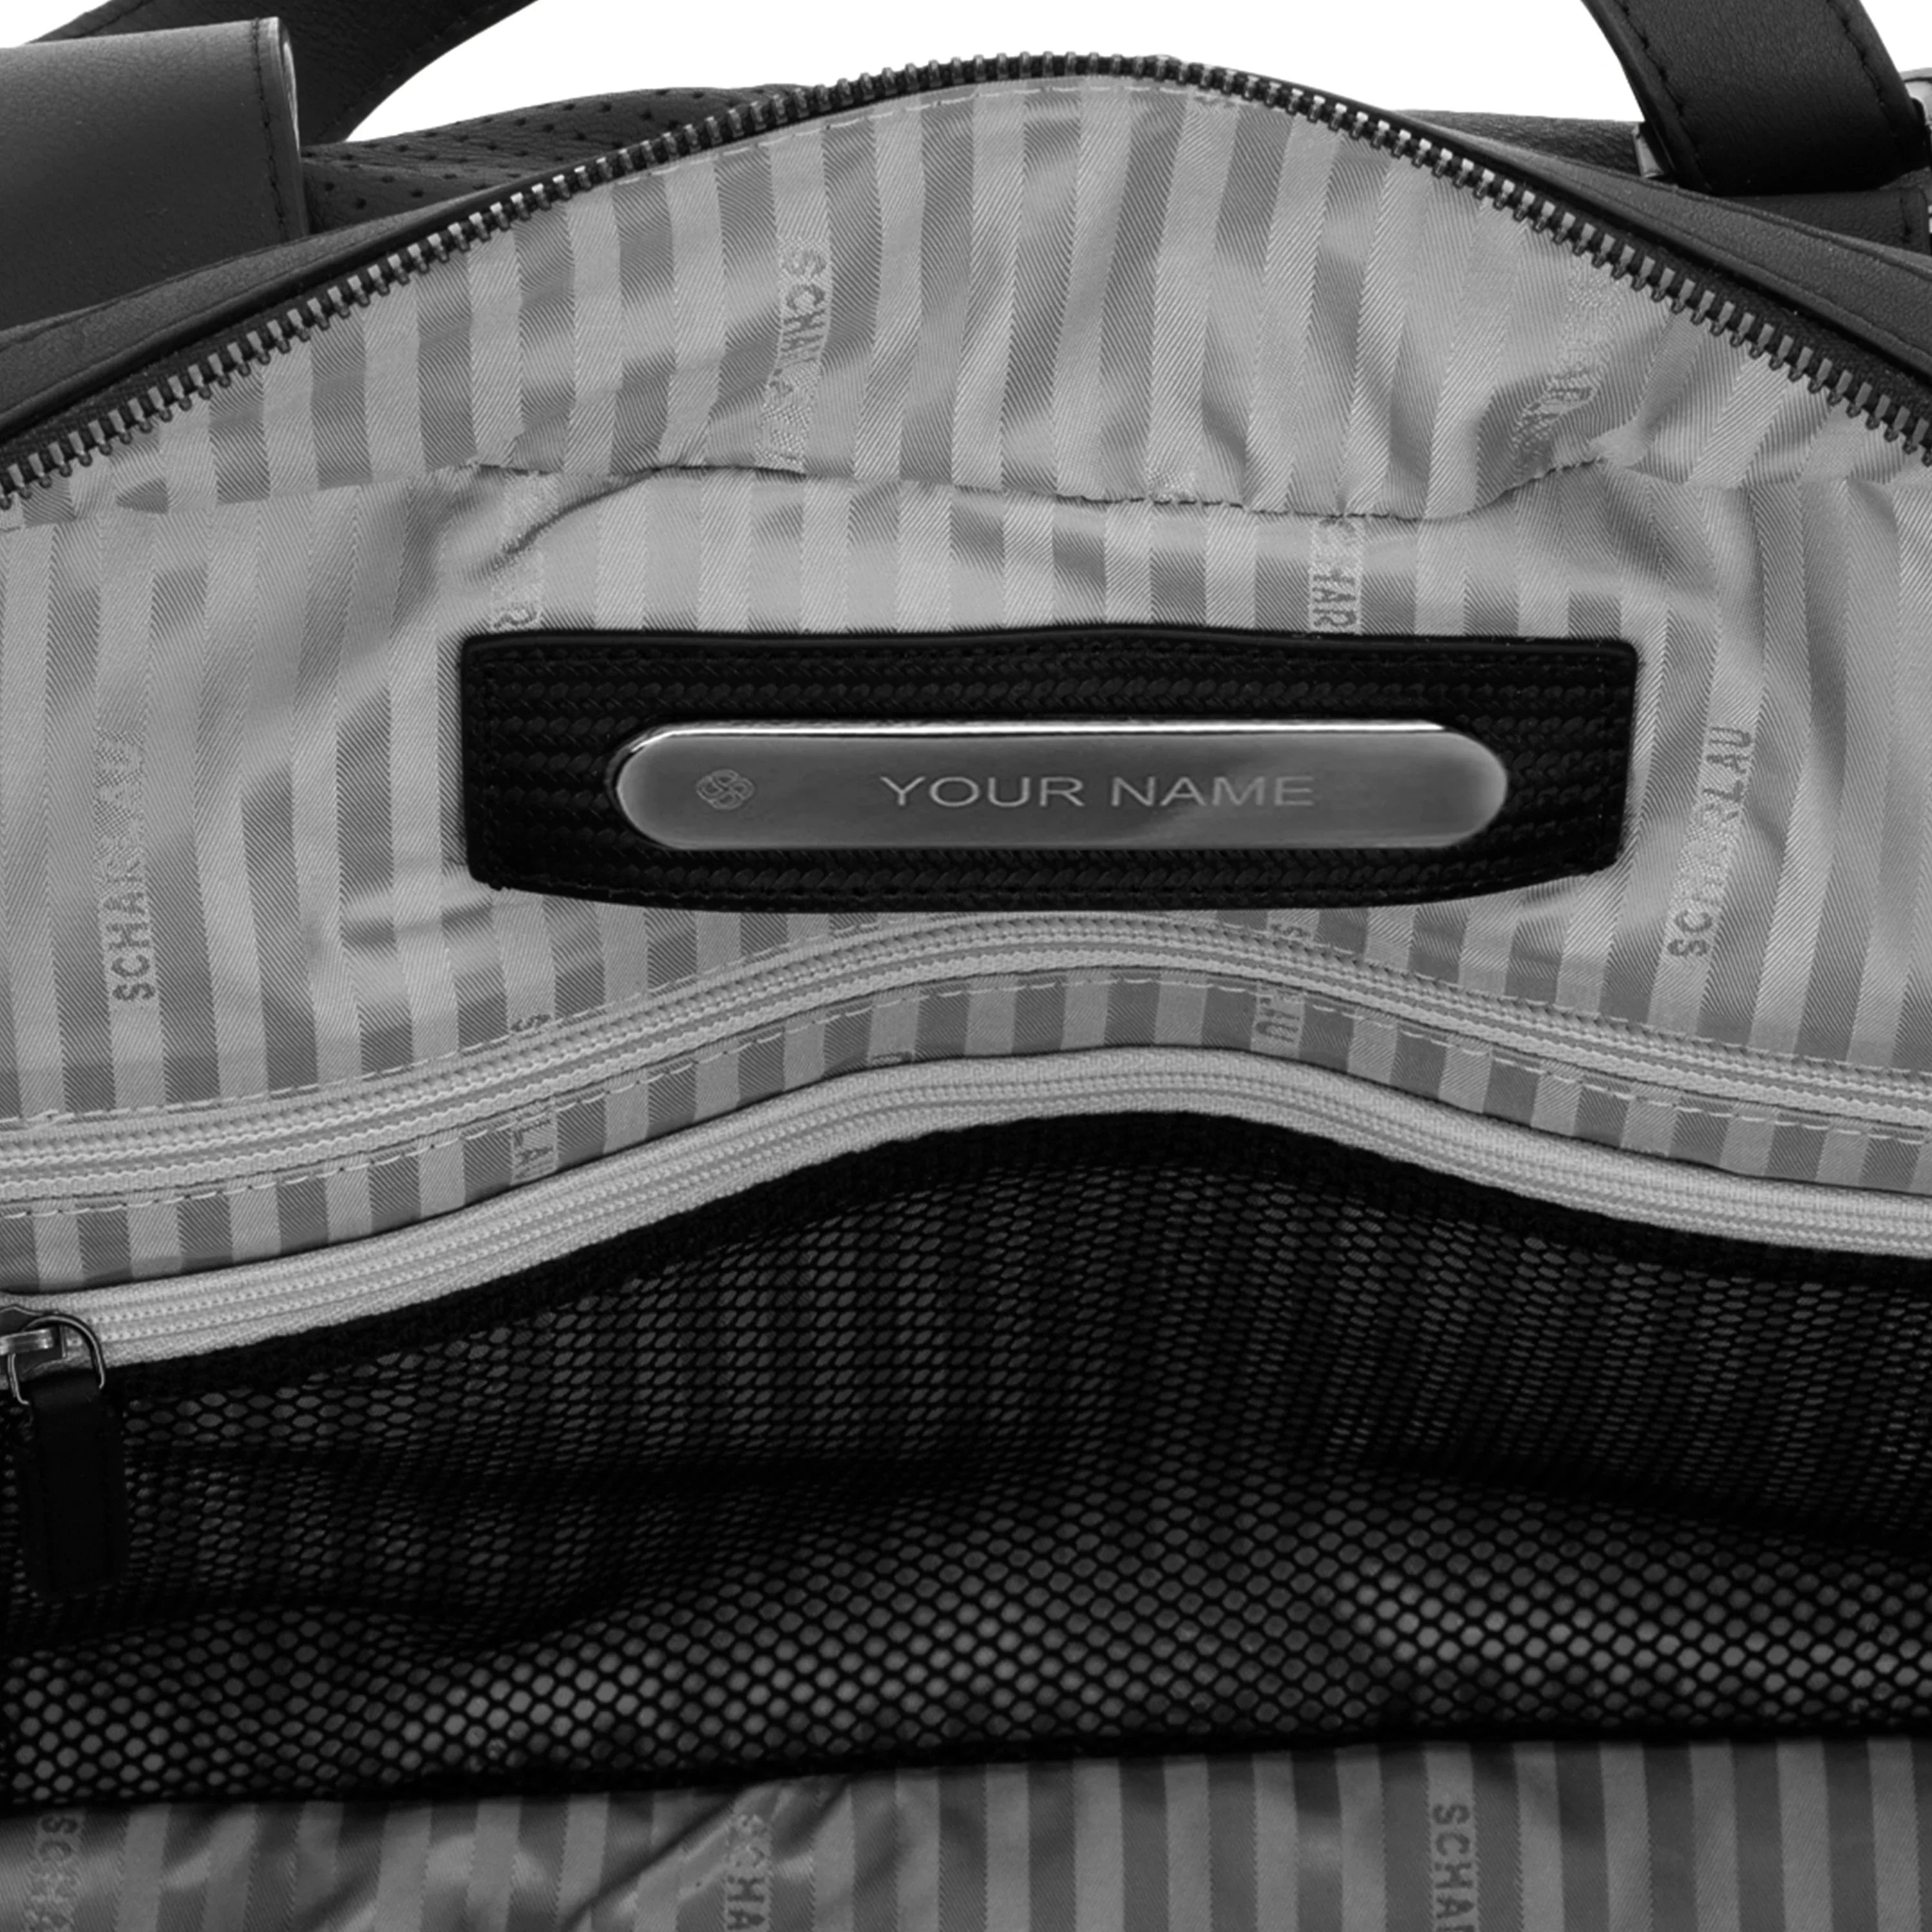 Scharlau Slackline Merayo Duffle Bag 46 cm - Orange